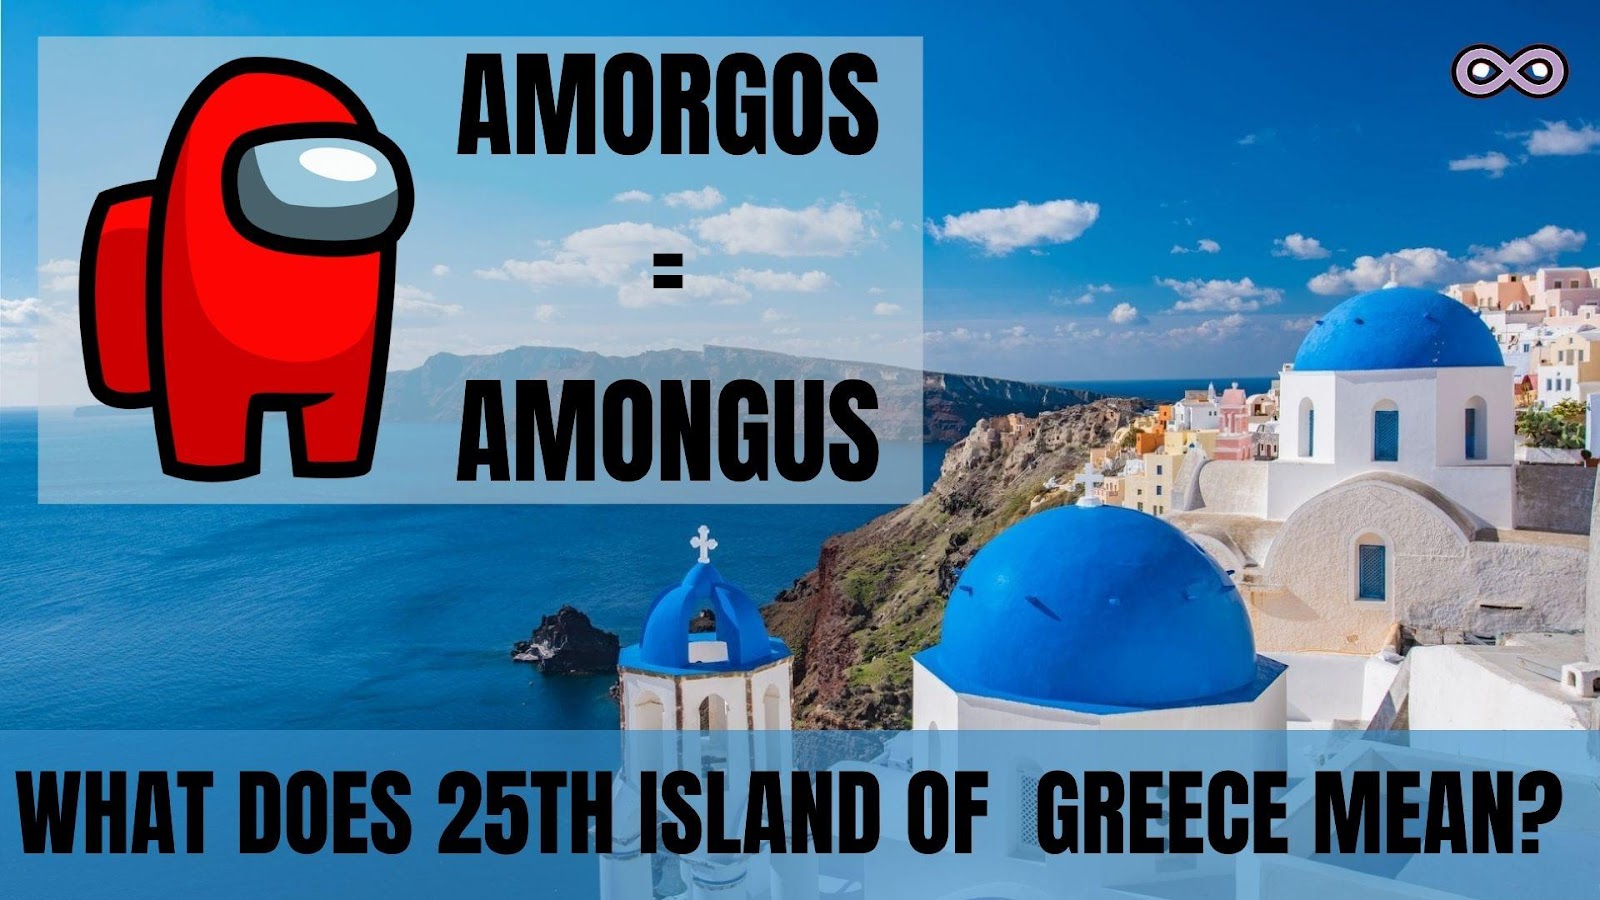 25th island of Greece